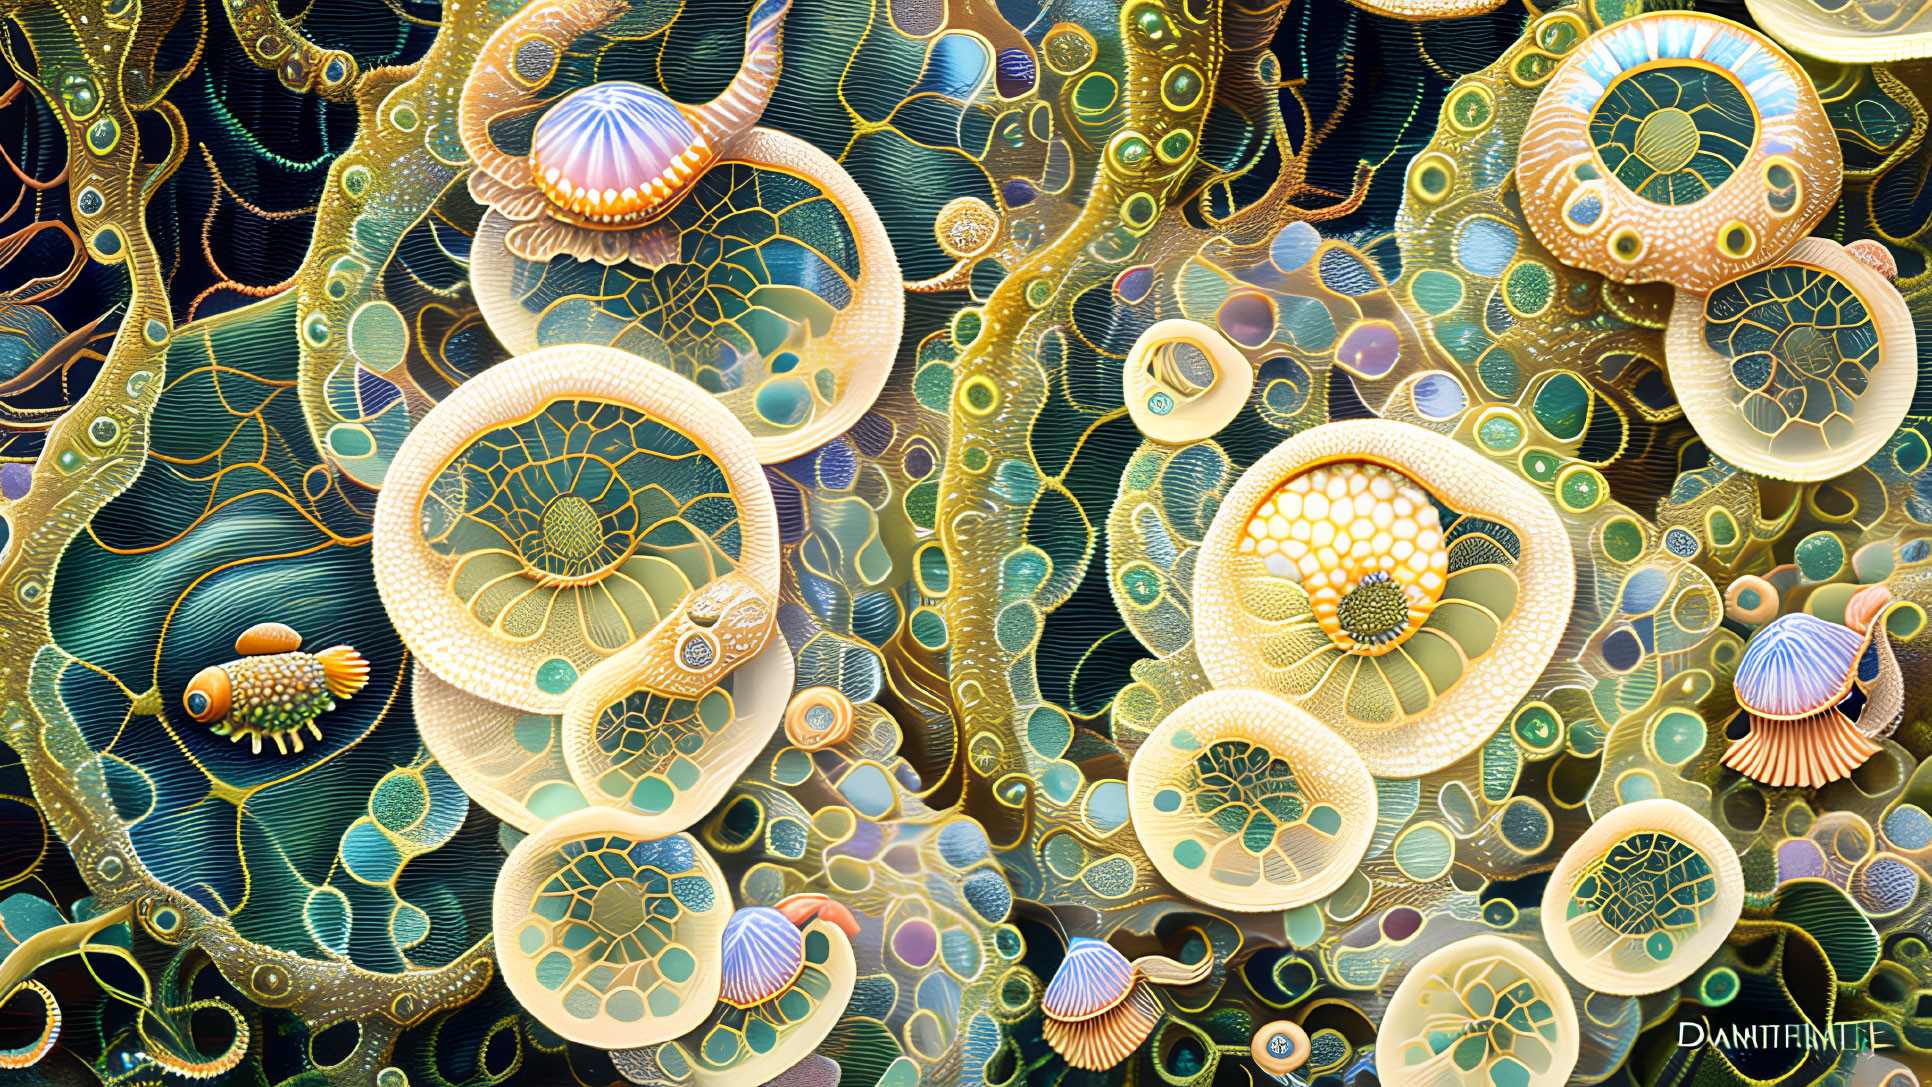 Colorful Fractal Art of Surreal Marine Life Shapes